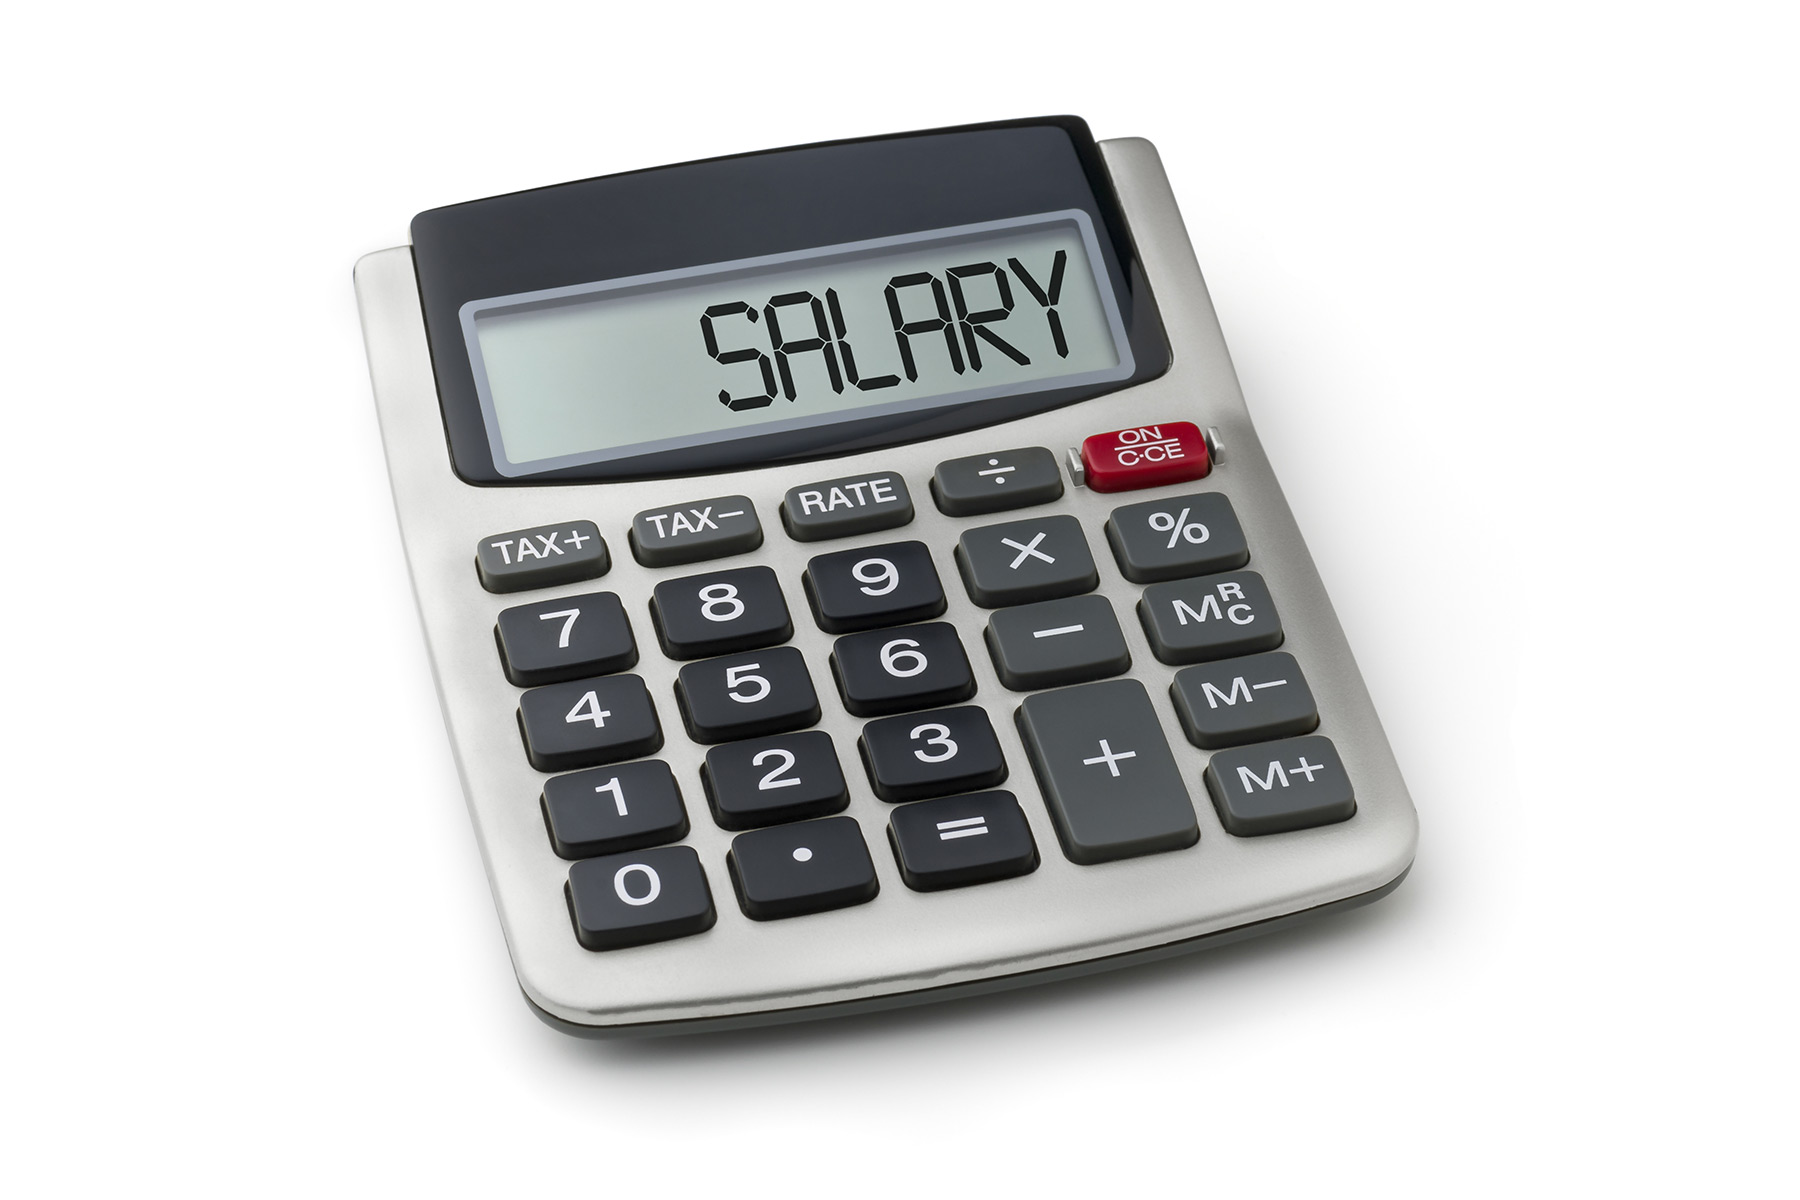 caluculator Used to Calculate Salary